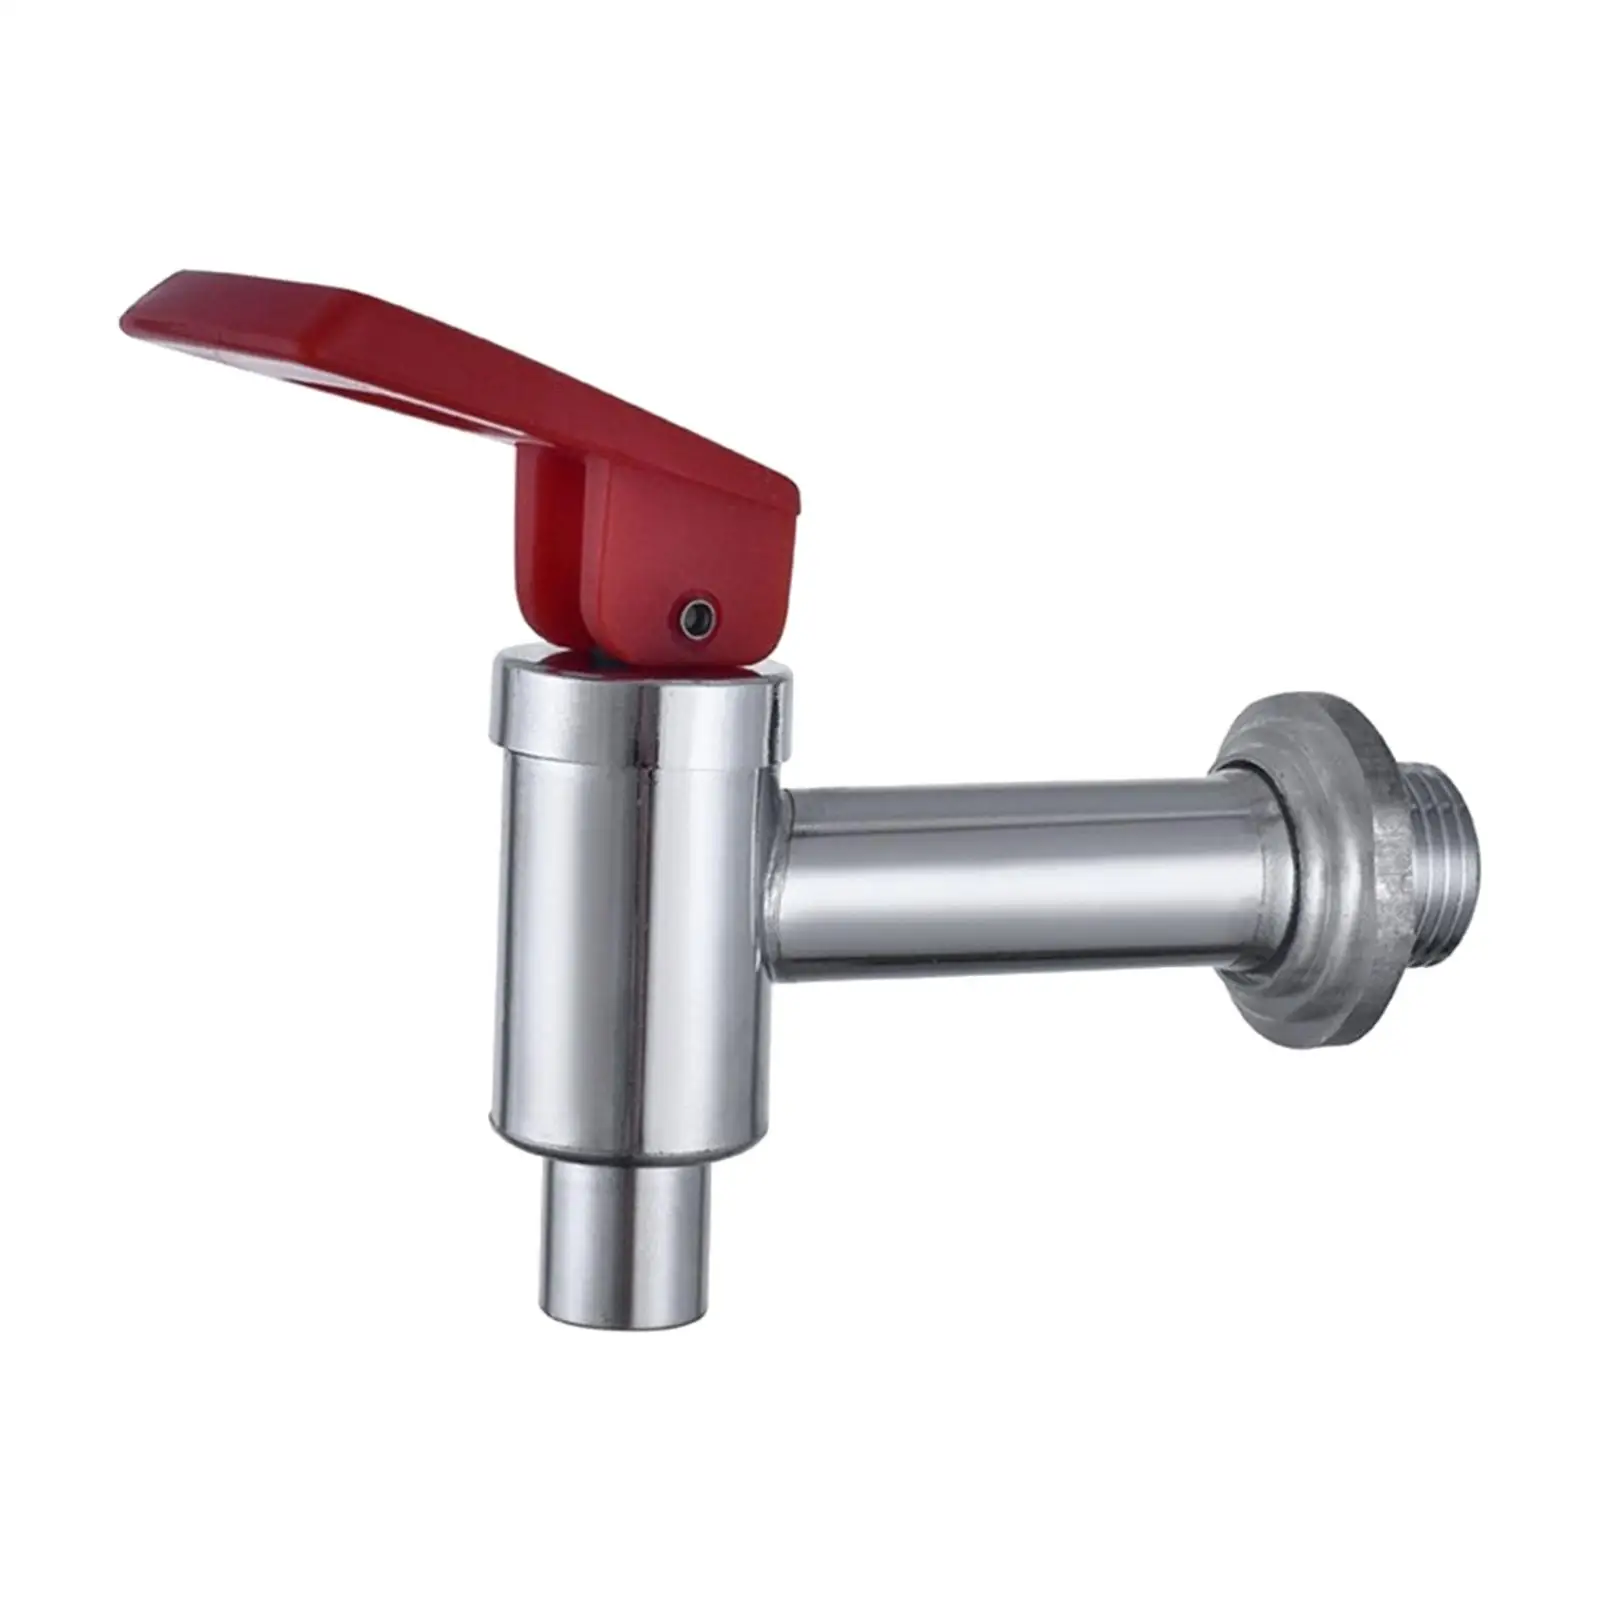 Replacement Spigot Portable Water Faucet Spout for Carafe Water Bottle Jug Kitchen Bucket Soymilk Machine Drink Dispenser